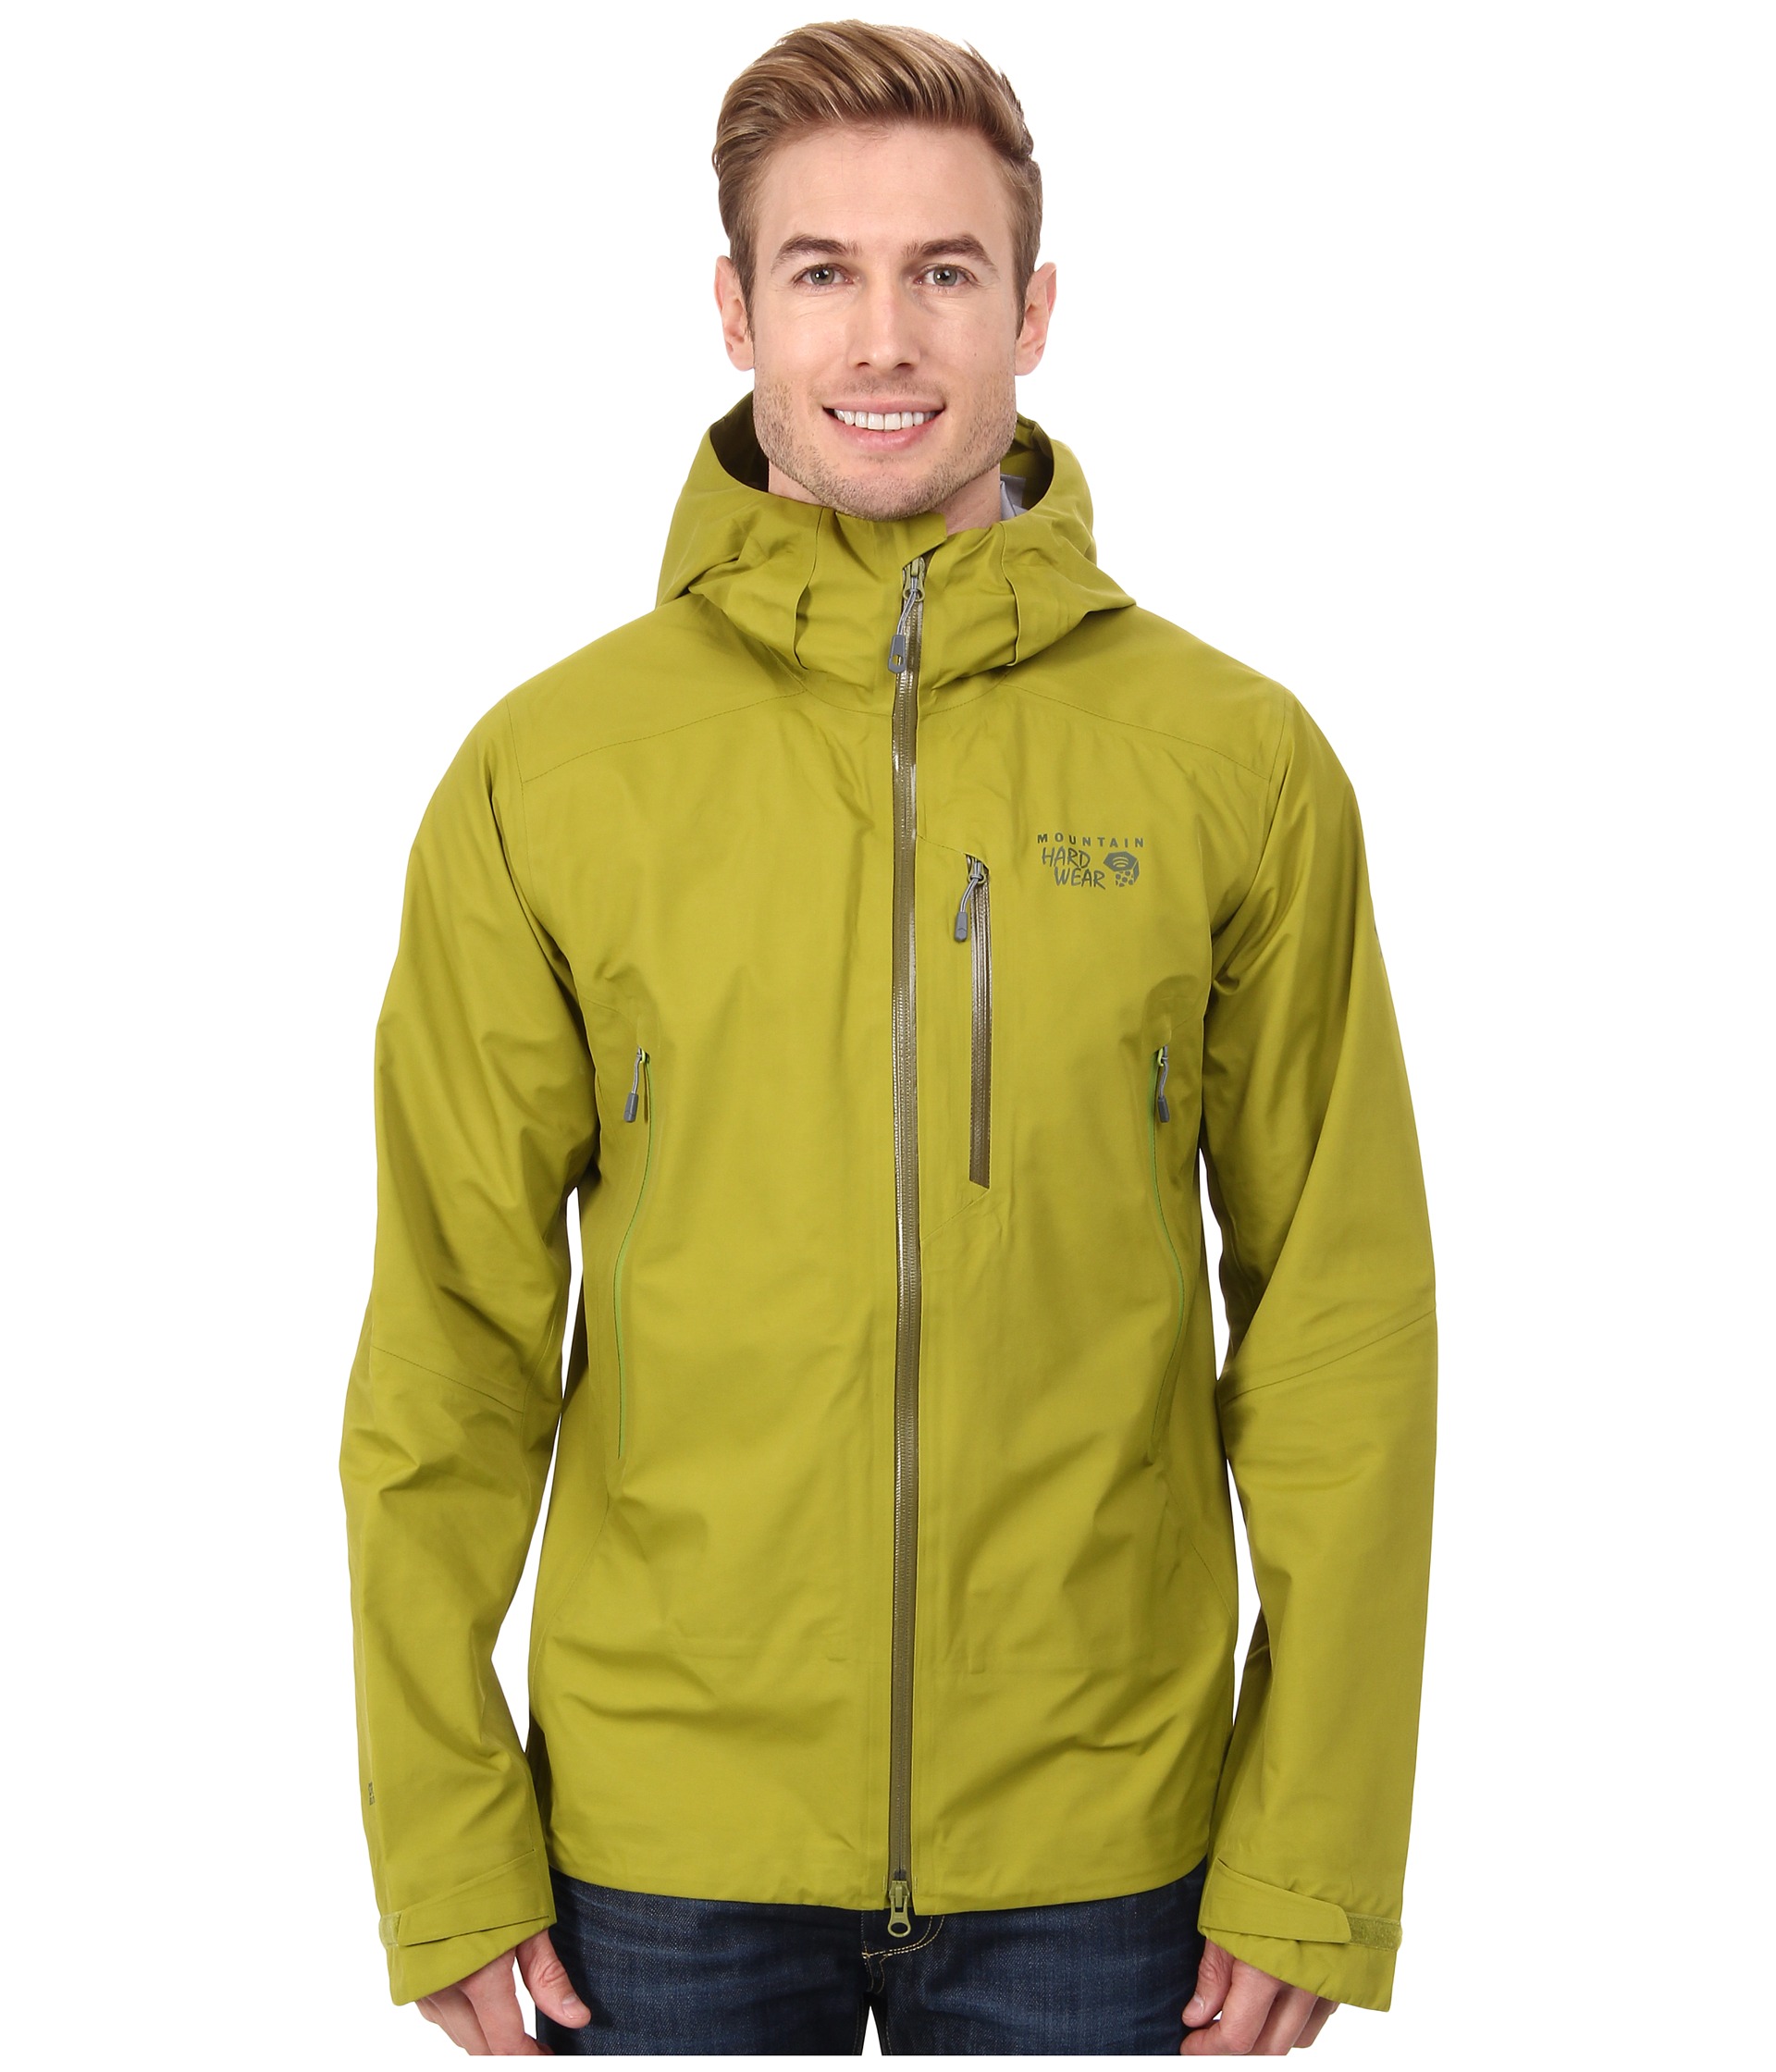 Mountain Hardwear Torsun Jacket, Clothing | Shipped Free at Zappos